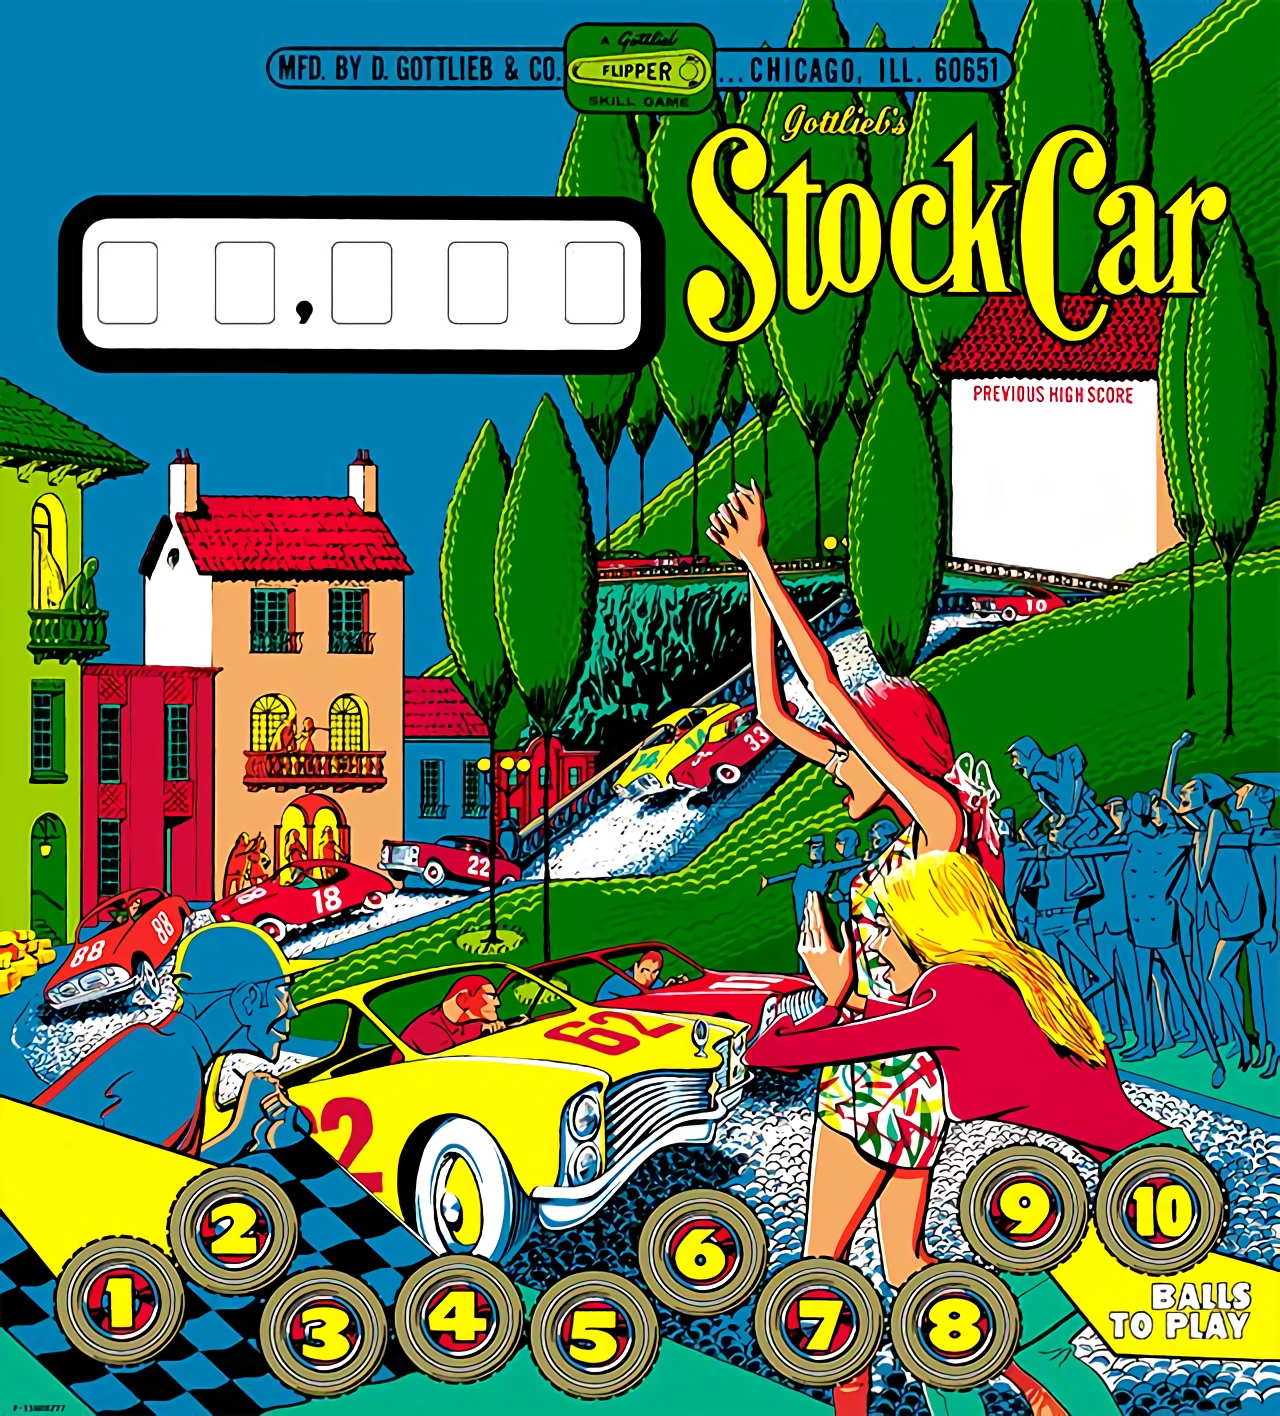 Stock Car (Gottlieb, 1970) (IkeS) Backglass